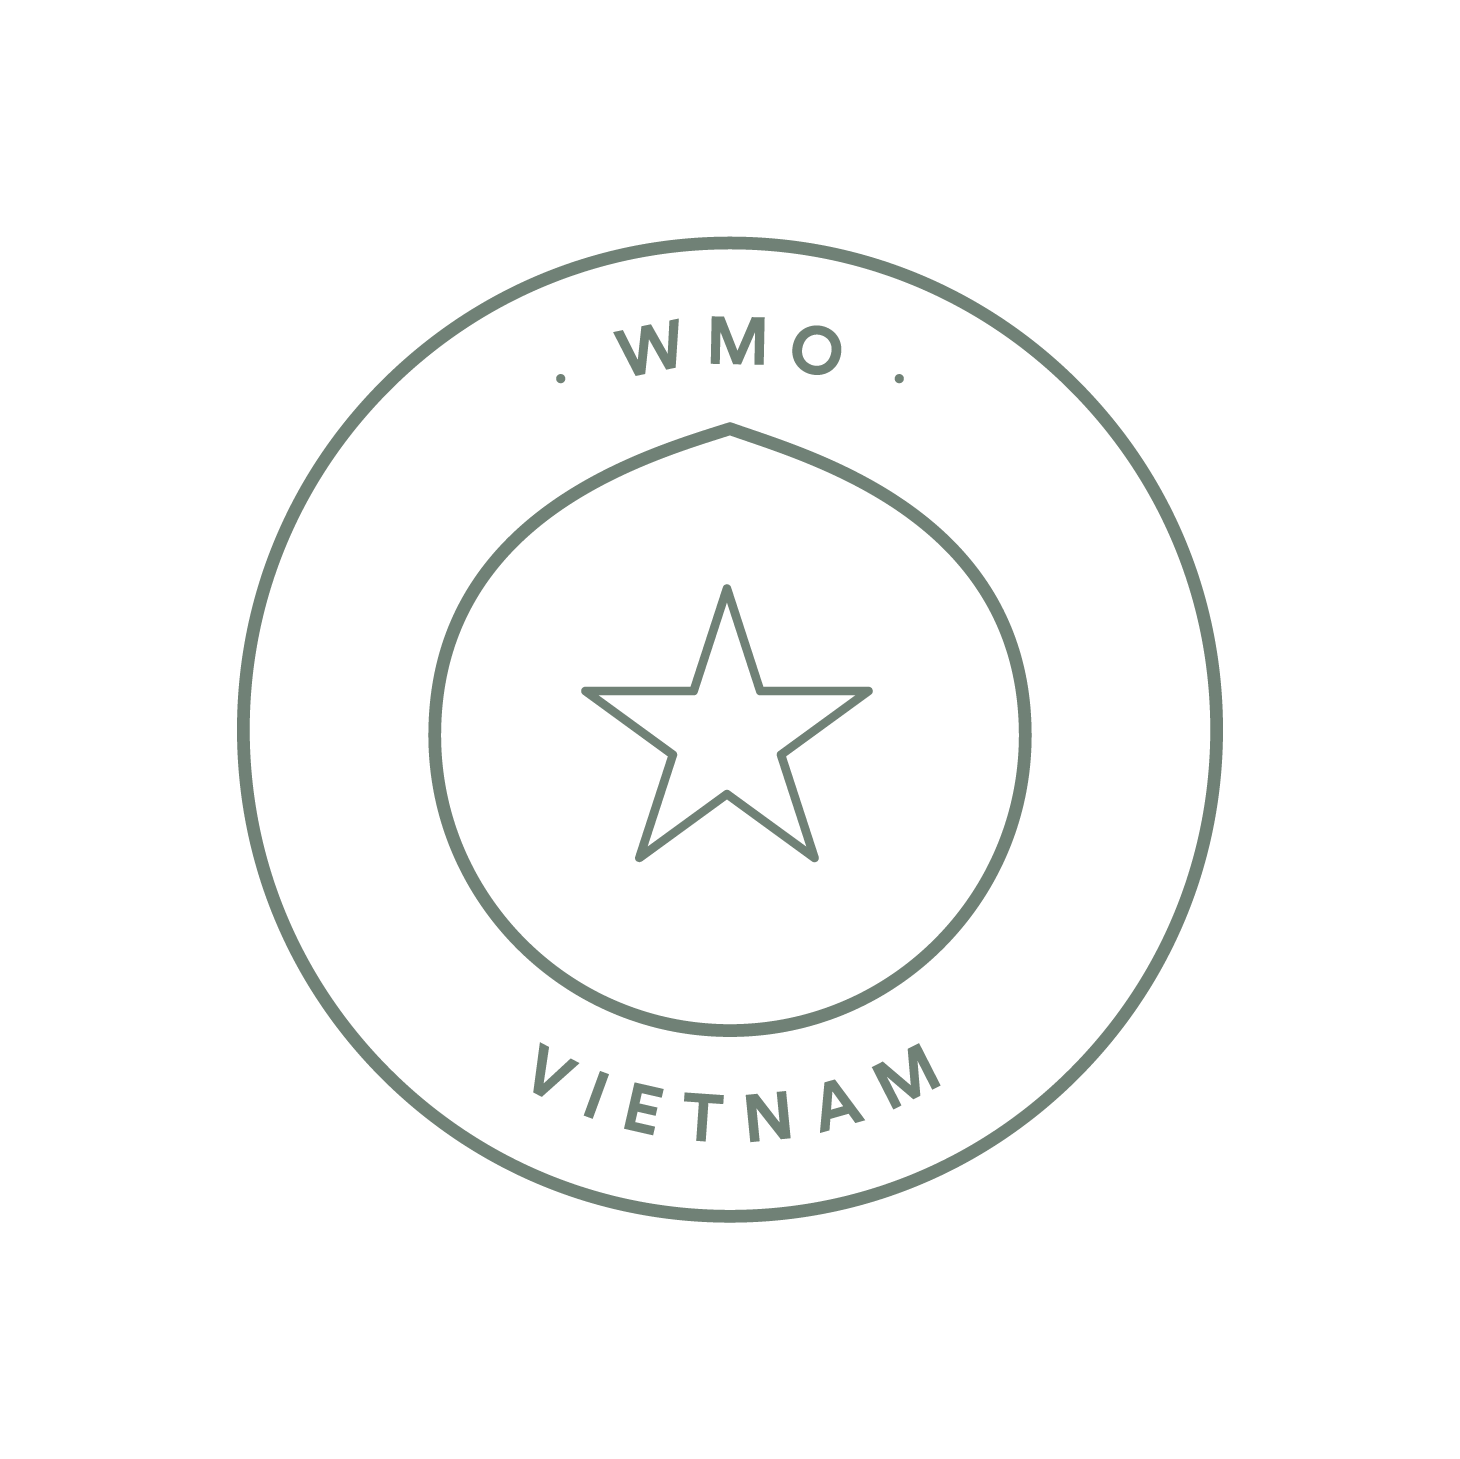 Vietnam World Macadamia Organisation member